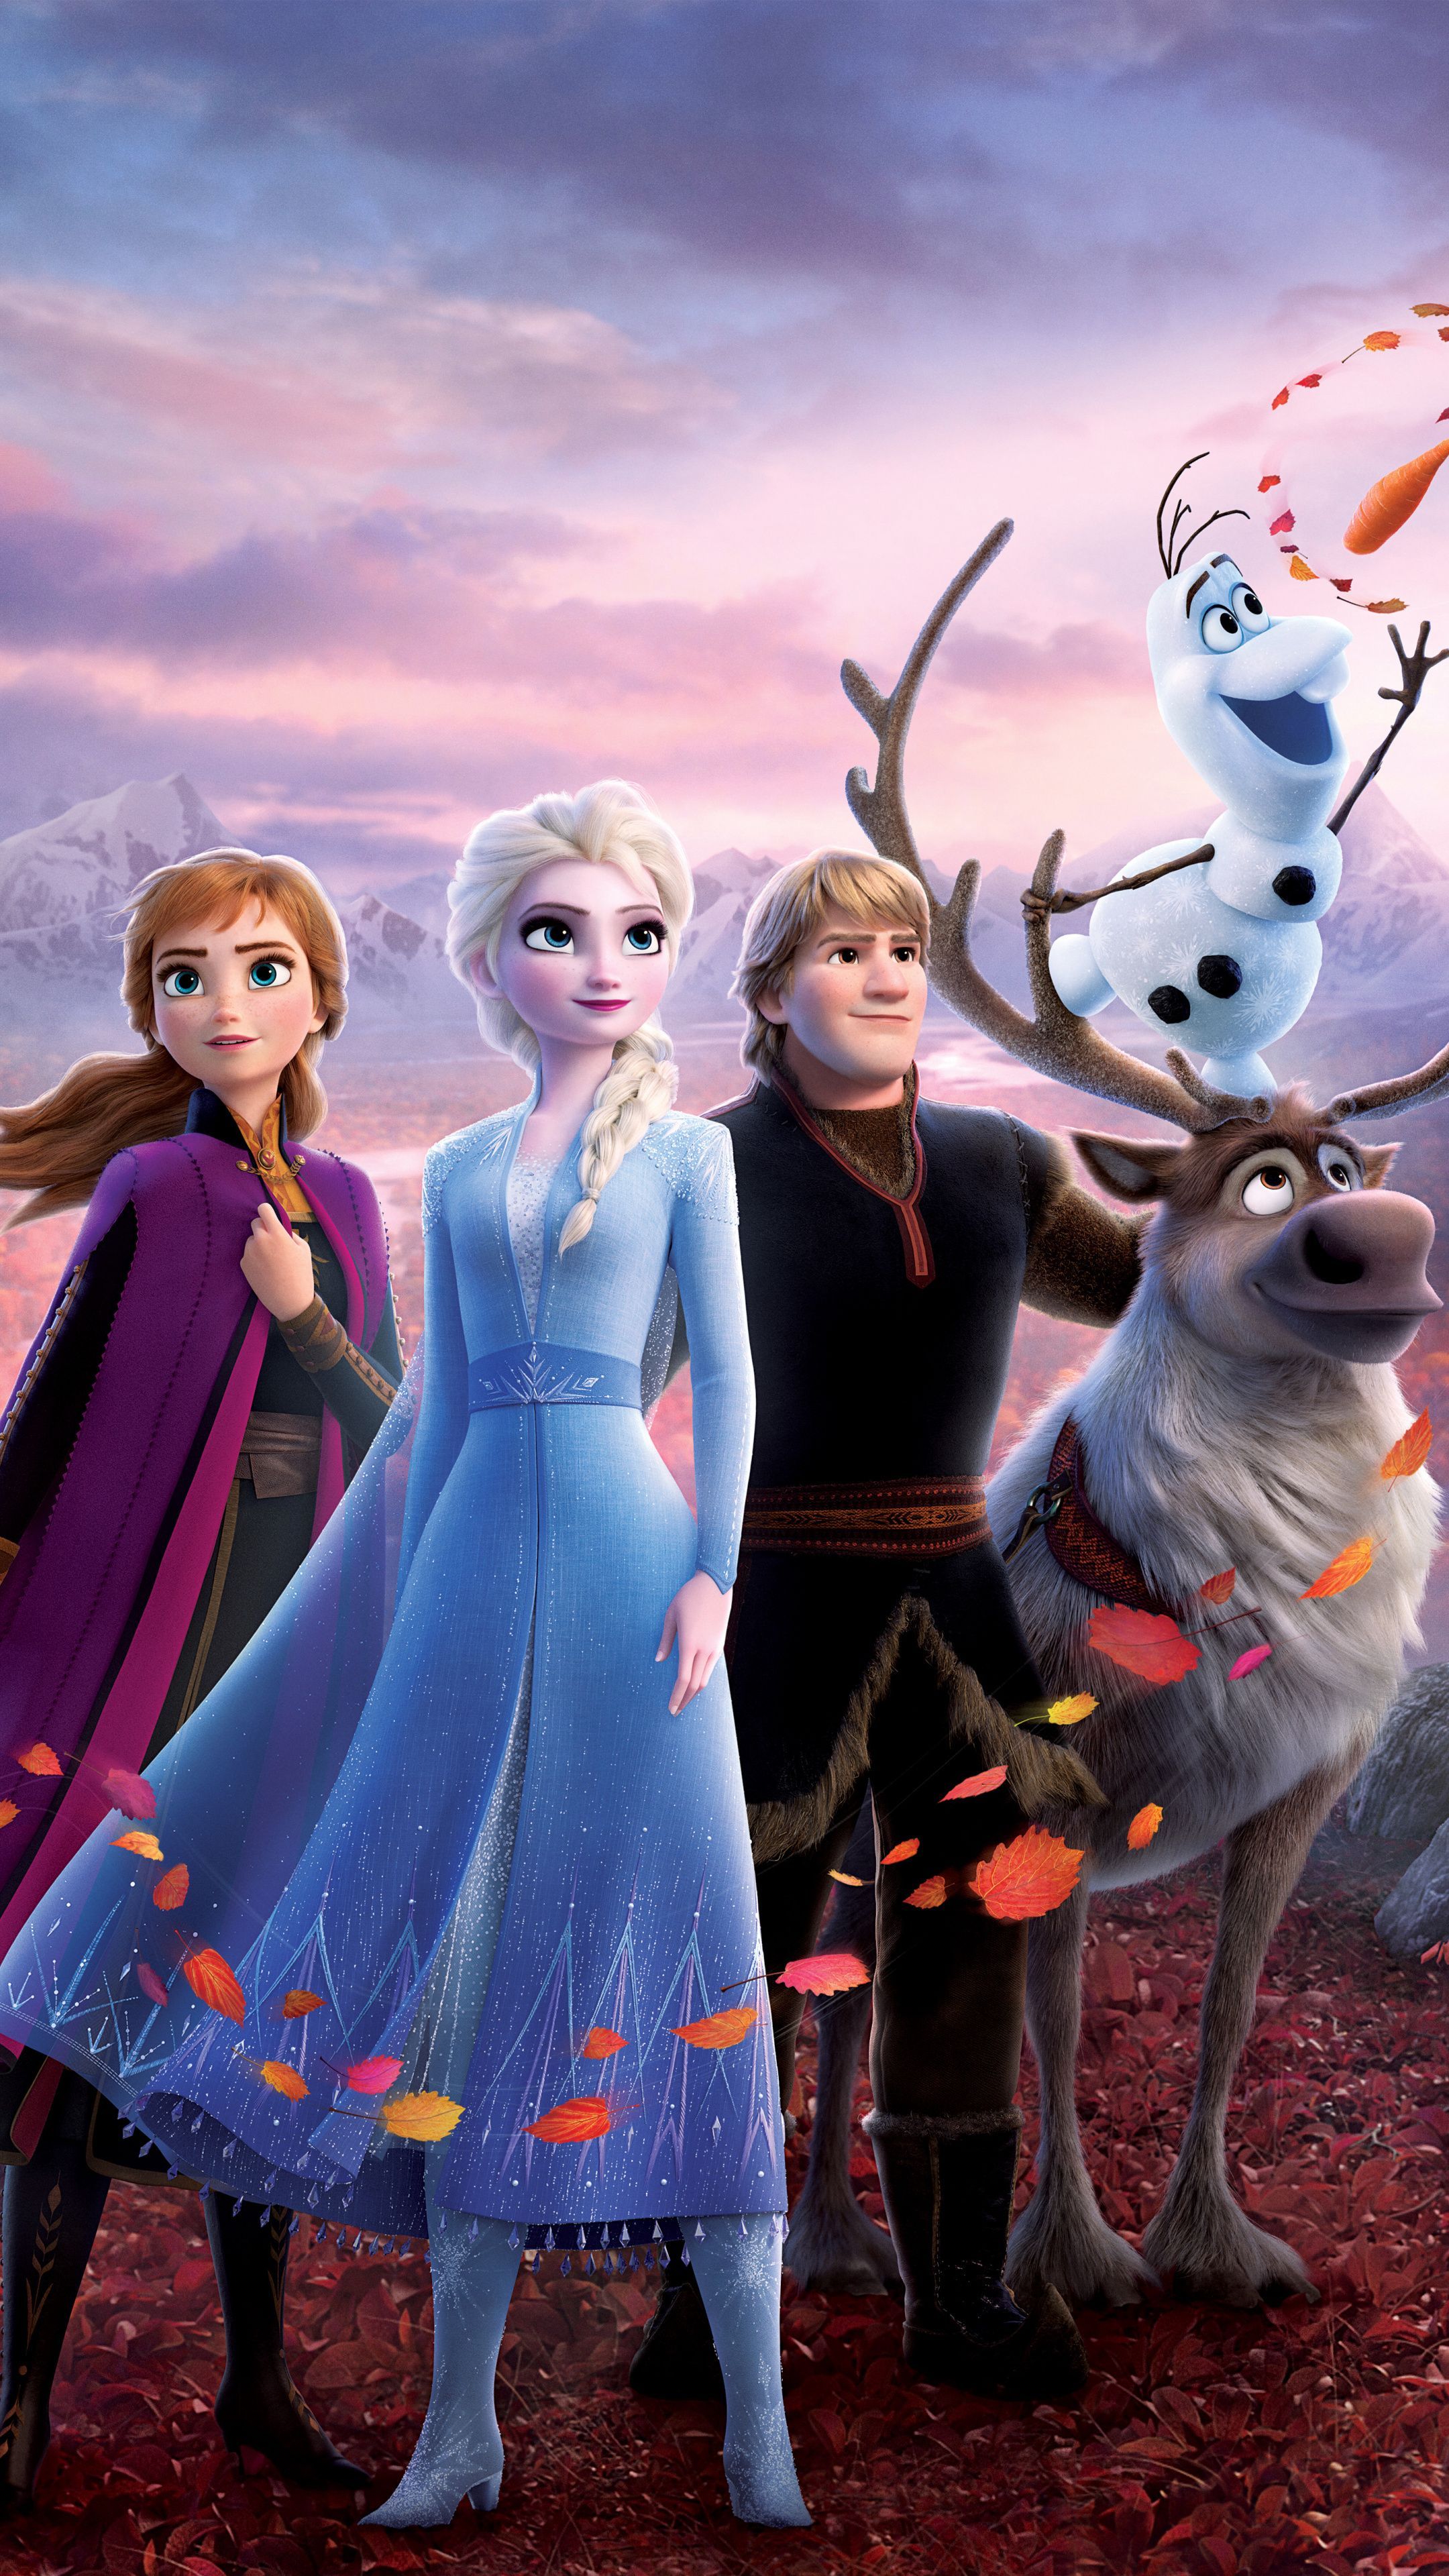 Download 2160x3840 Wallpaper Movie, Disney's Animation Movie, Frozen Sisters, 4к, Sony. Disney princess frozen, Frozen disney movie, Disney princess wallpaper